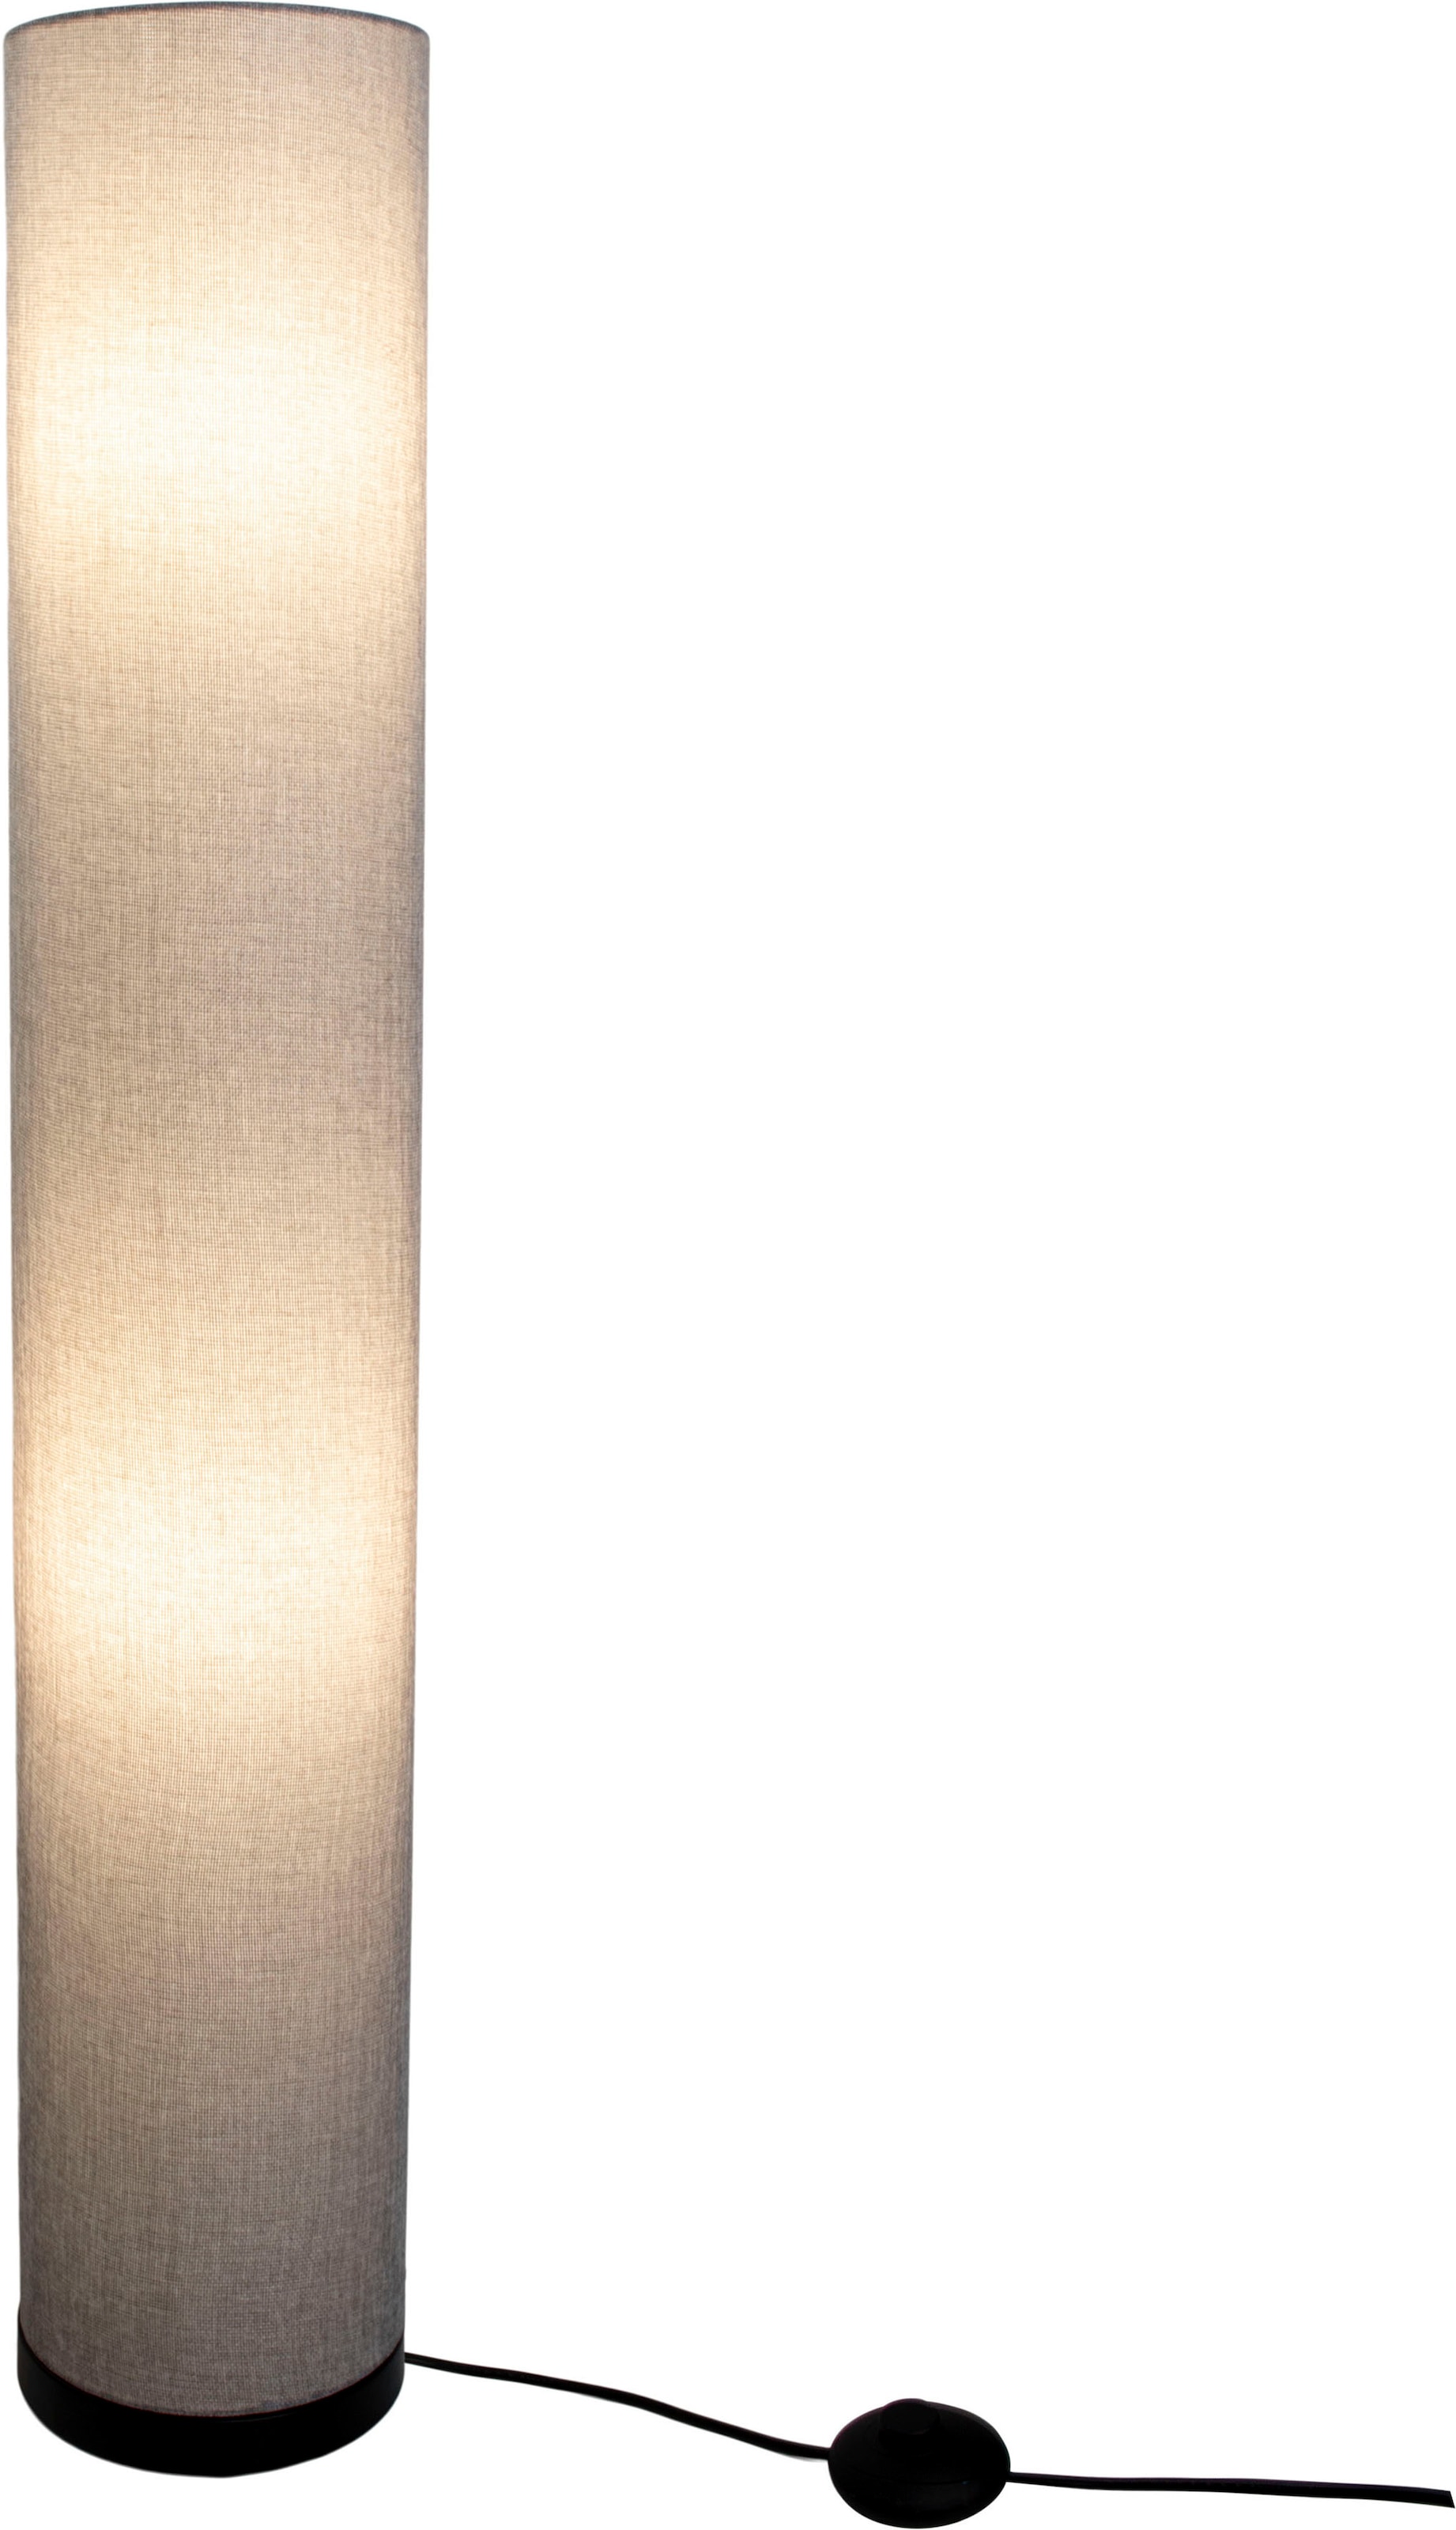 näve Stehlampe grau Farbe: OTTO Höhe: 110cm, exkl. max. flammig-flammig, »Beate«, Metall/Textil, E27 bei 3x 40W, 3 online